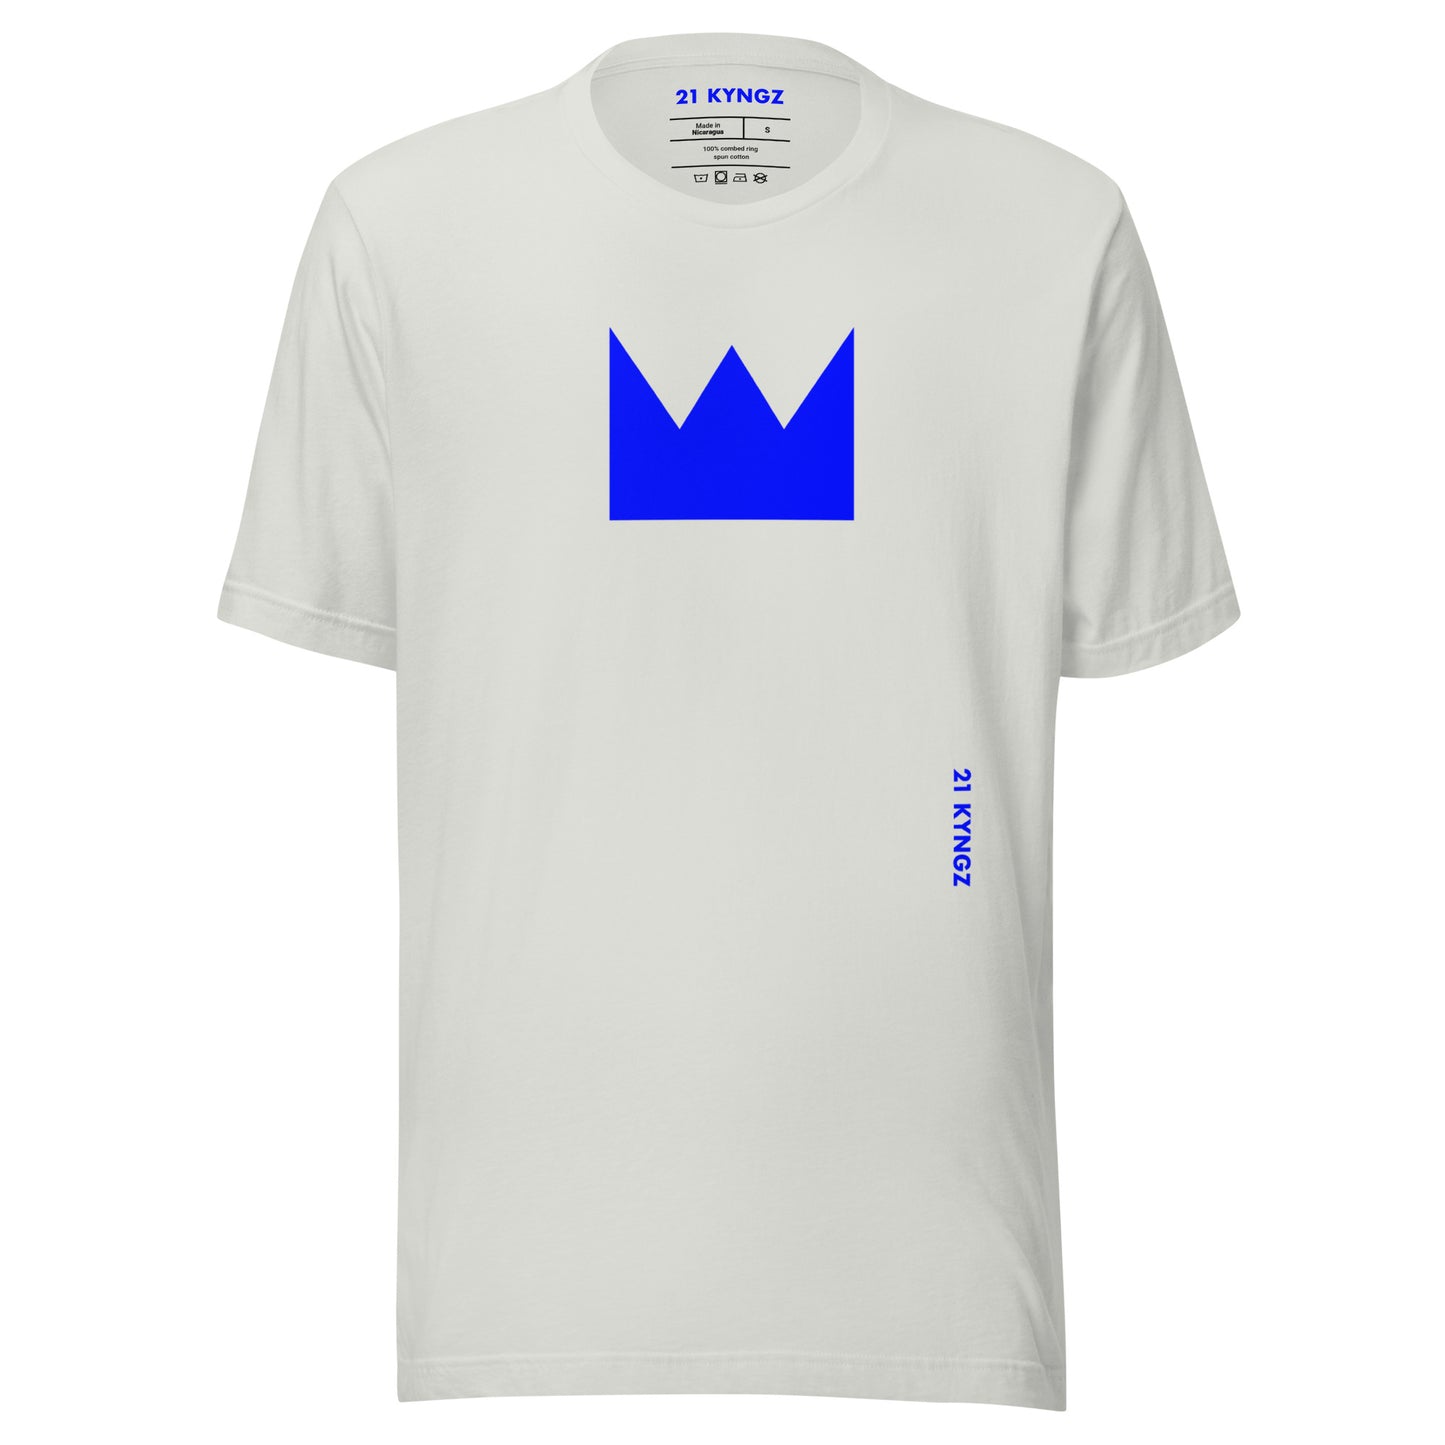 21 KYNGZ (Bl)3 T-shirt